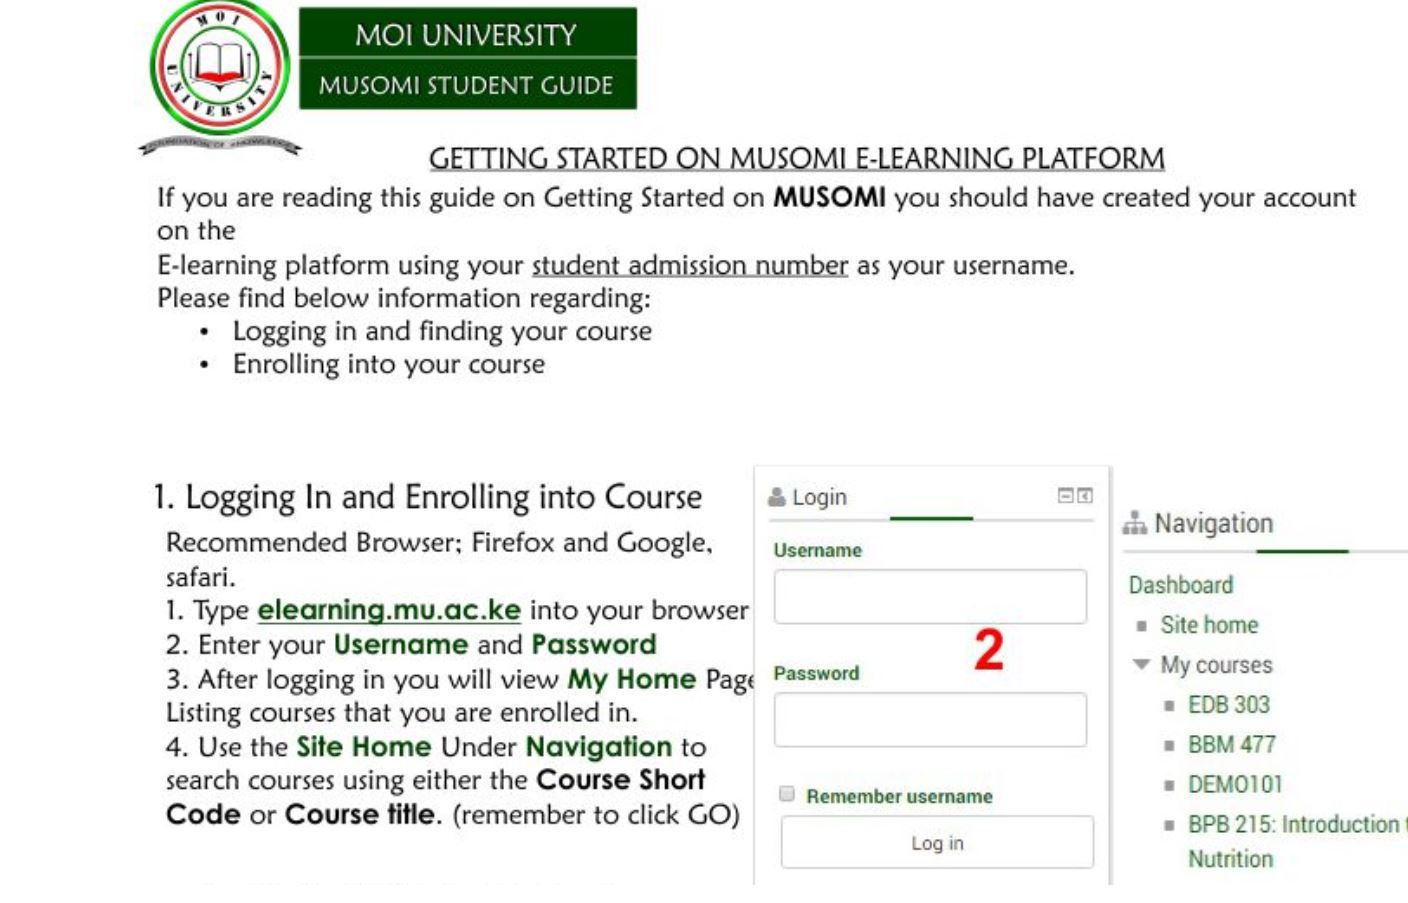 Moi university portal, Musomi website Registration Guide